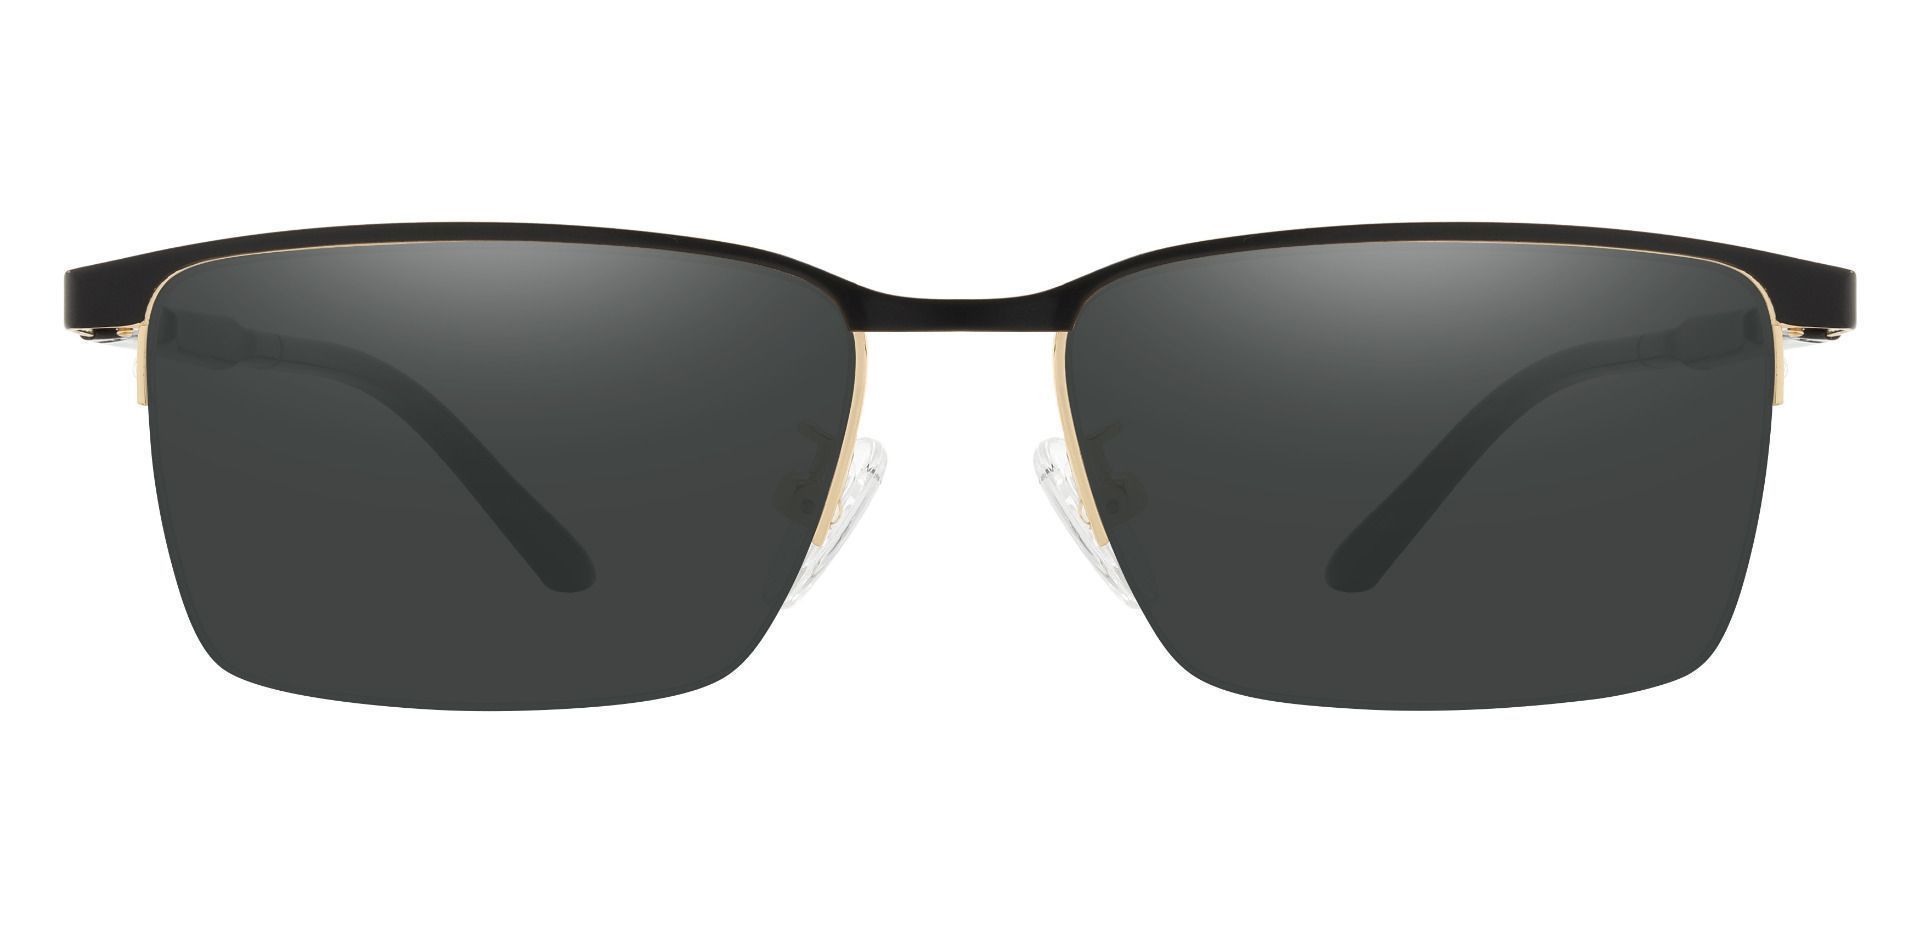 Benito Rectangle Prescription Sunglasses - Gold Frame With Gray Lenses